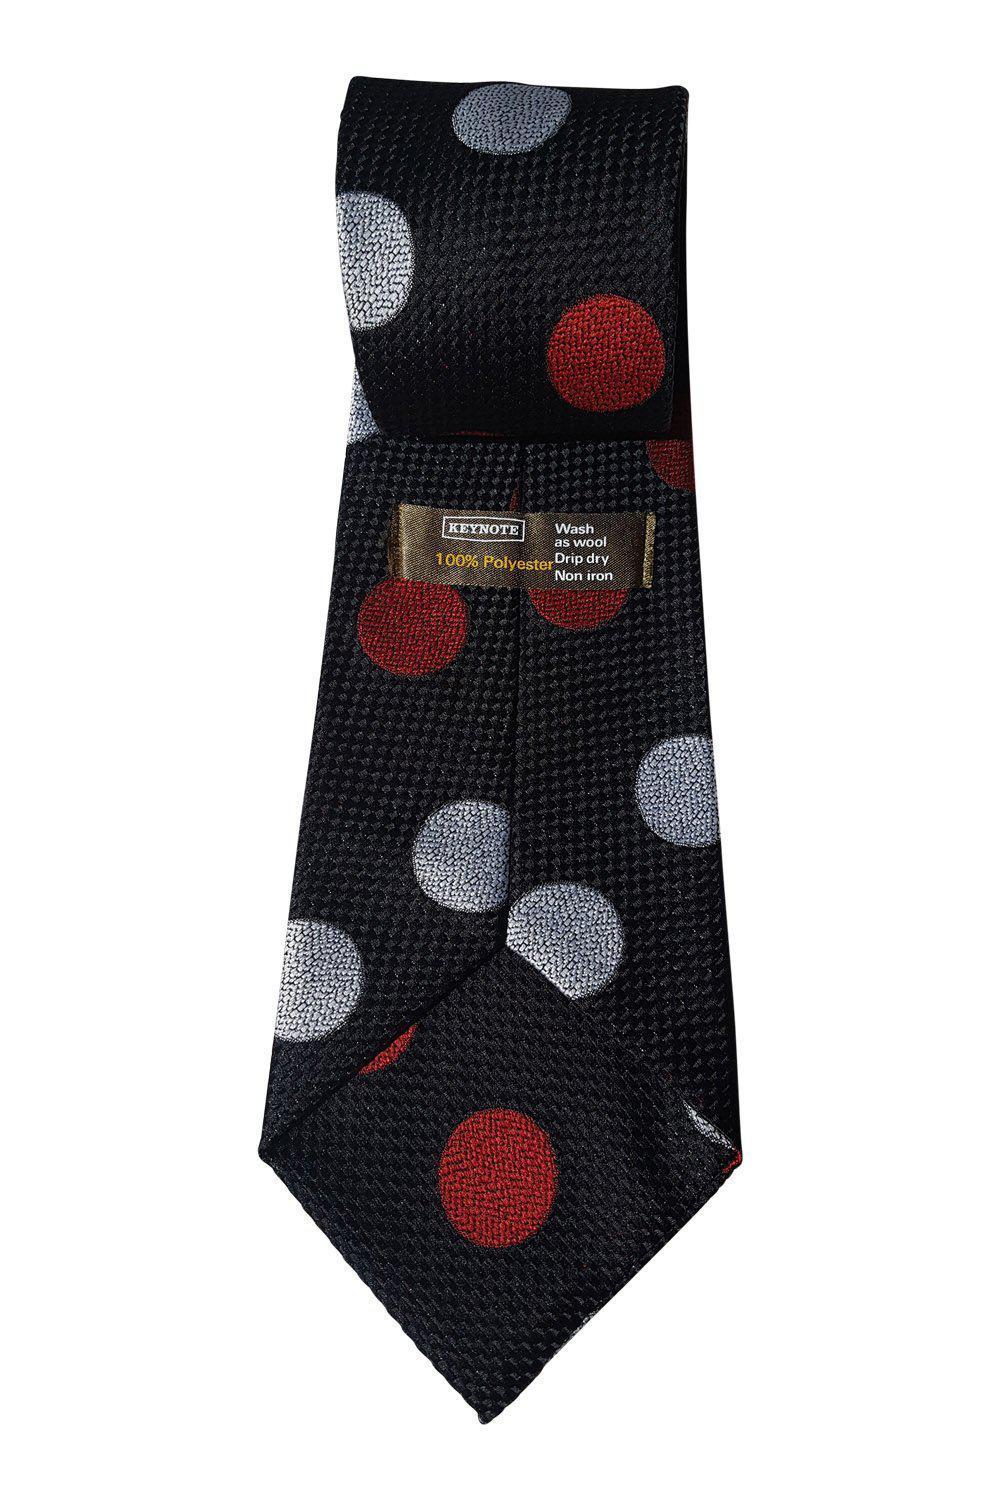 KEYNOTE Black Multi Coloured Dotted Neck Tie (55.5")-Keynote-The Freperie